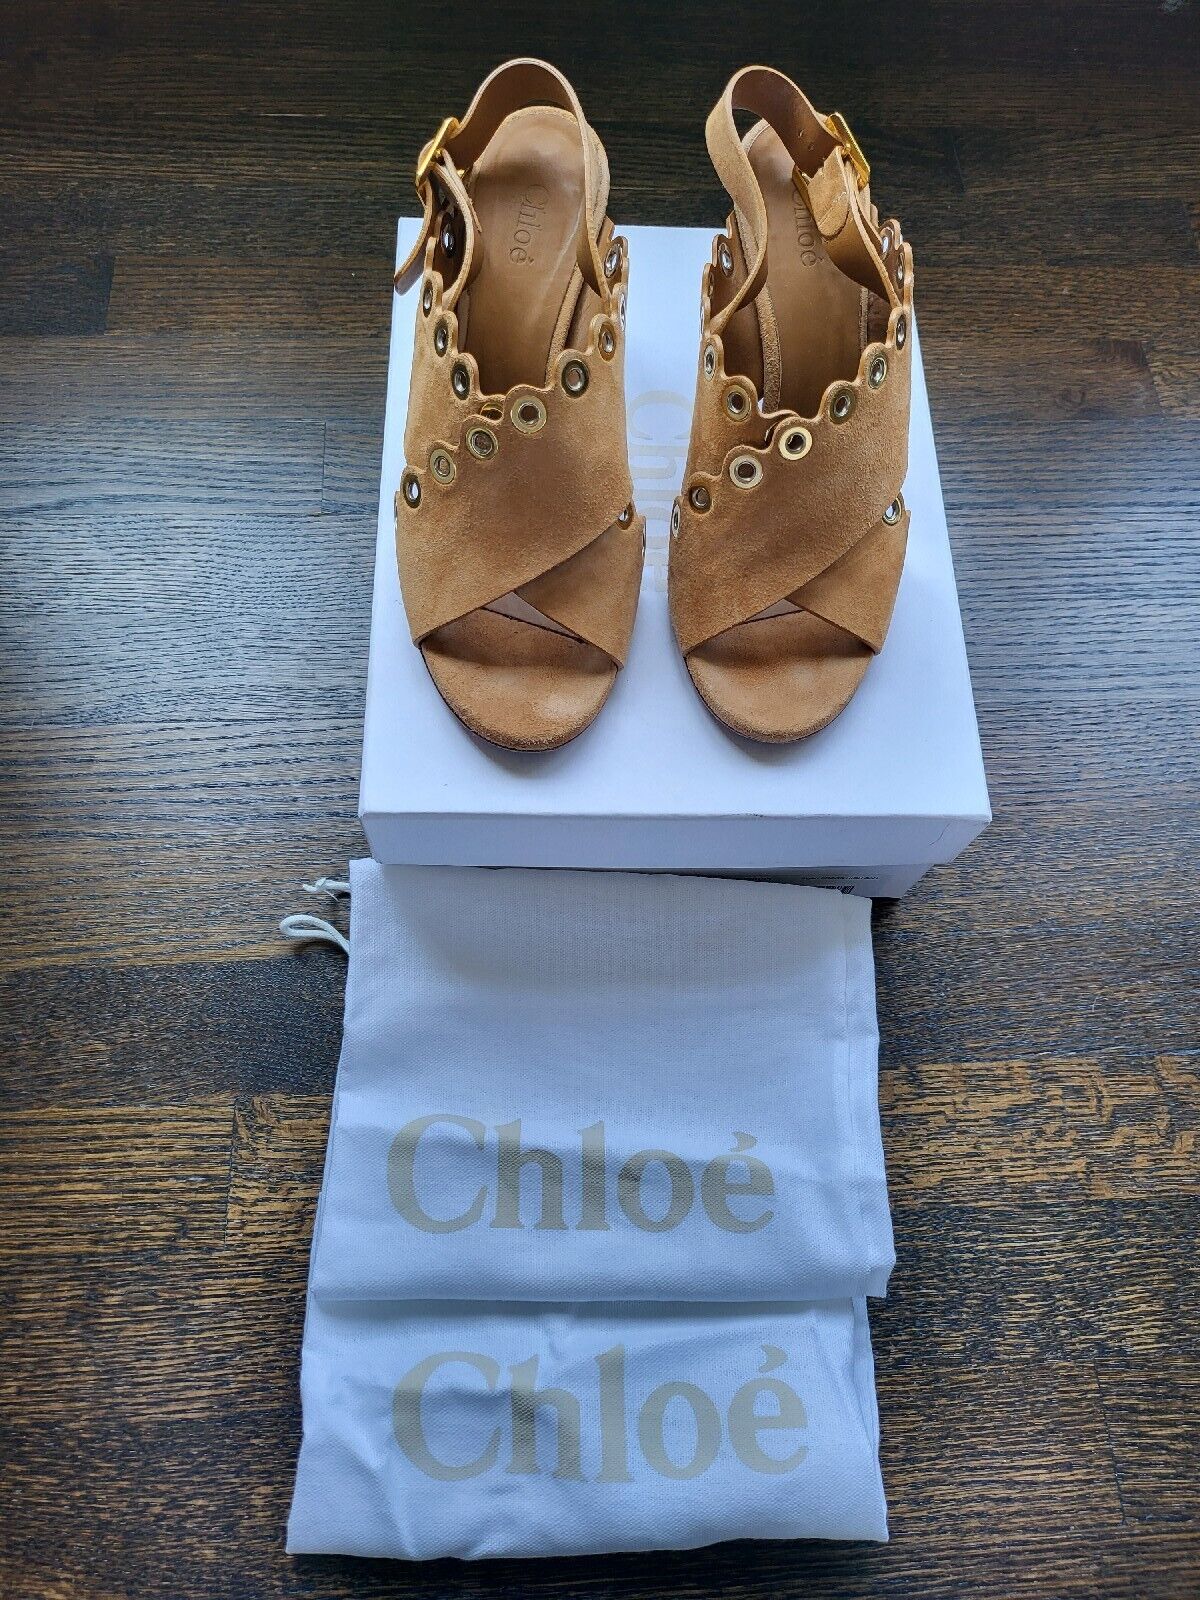 CHLOE Women\'s Cross-Strap Suede High Heel Sandals, Tan, Size EU 38.5 (US 8.5)